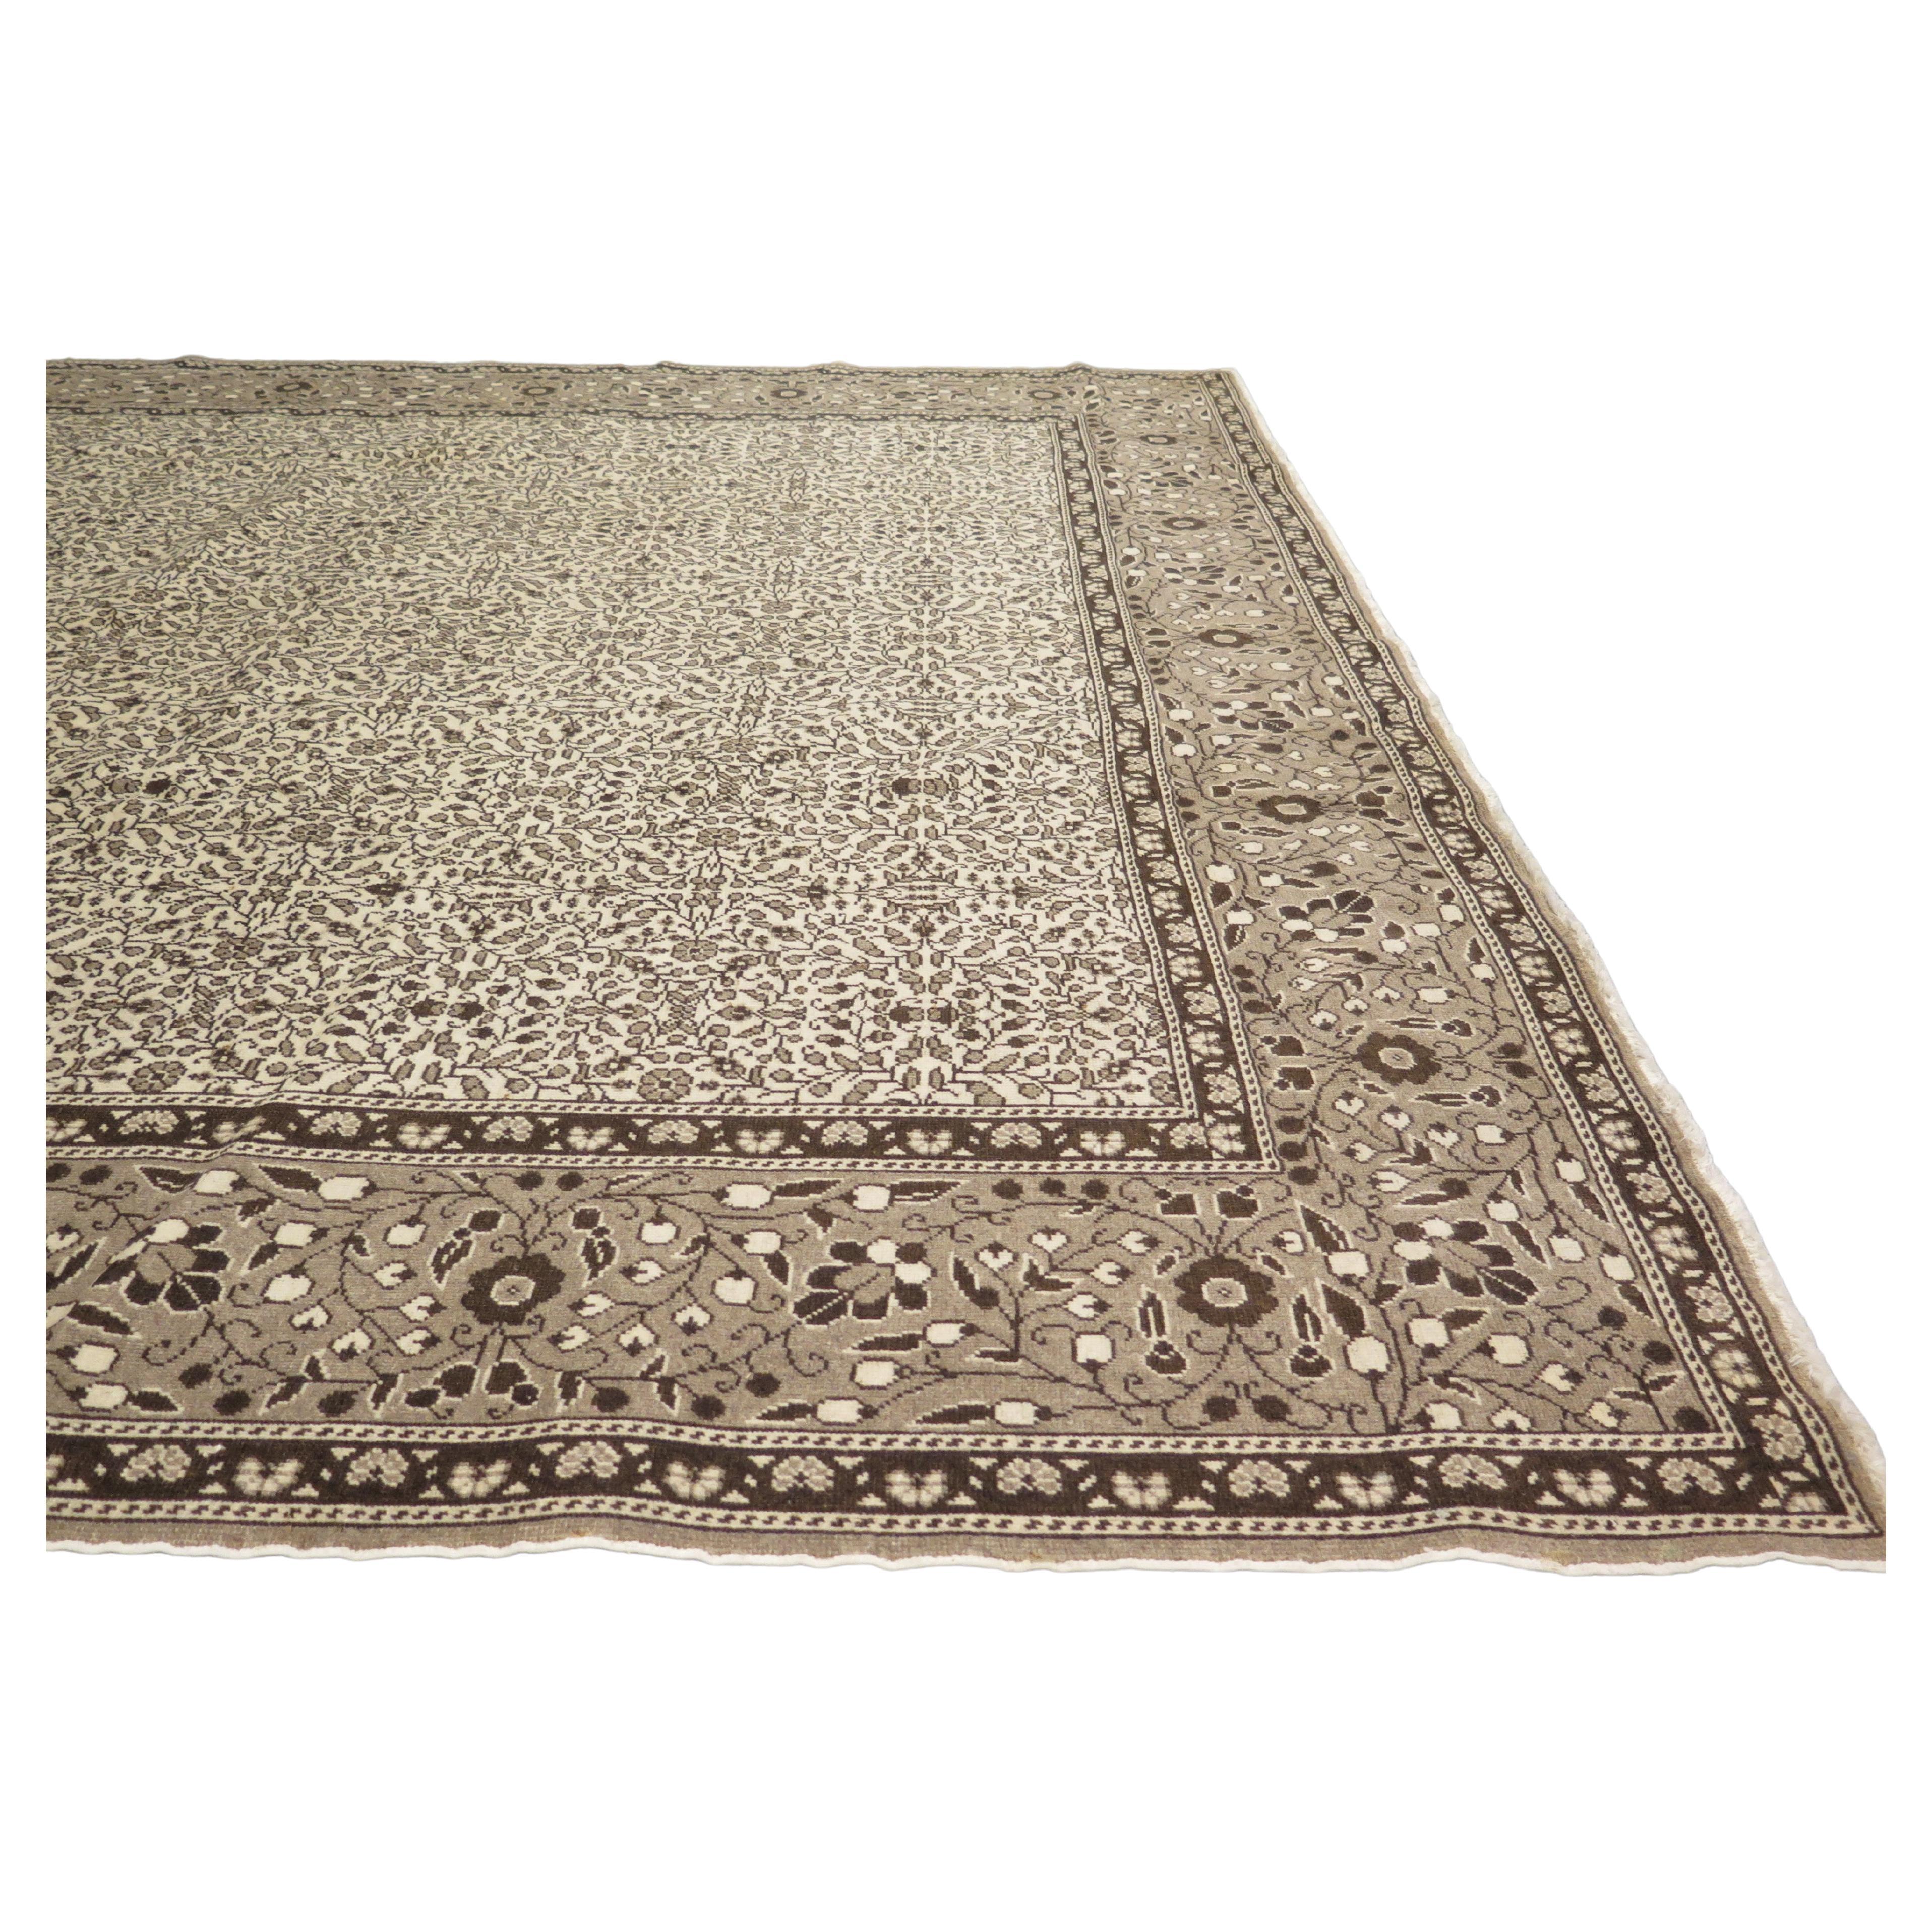 Mimimalist 1930s Anatolian Carpet For Sale